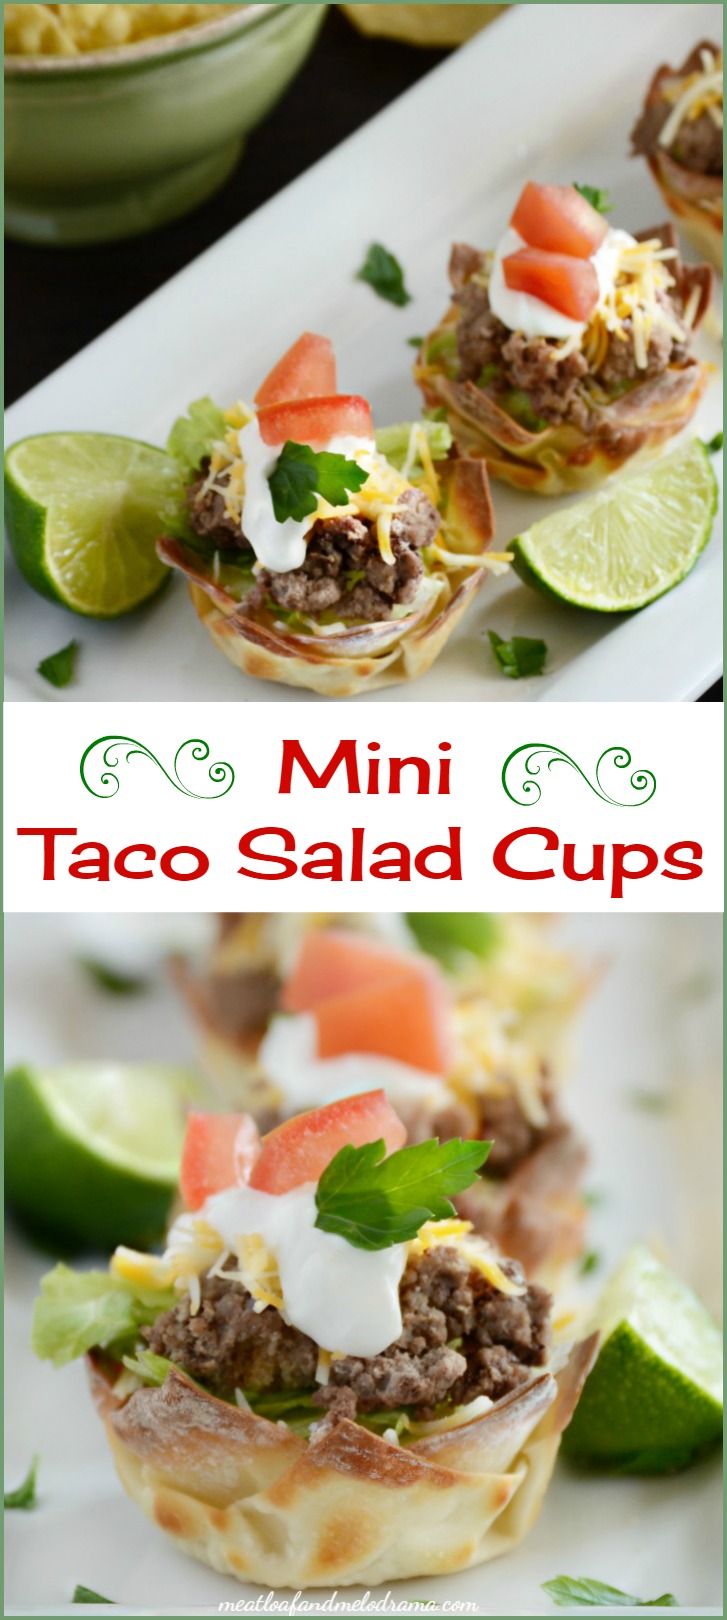 https://www.meatloafandmelodrama.com/wp-content/uploads/2016/04/mini-taco-salad-cups-recipe.jpg